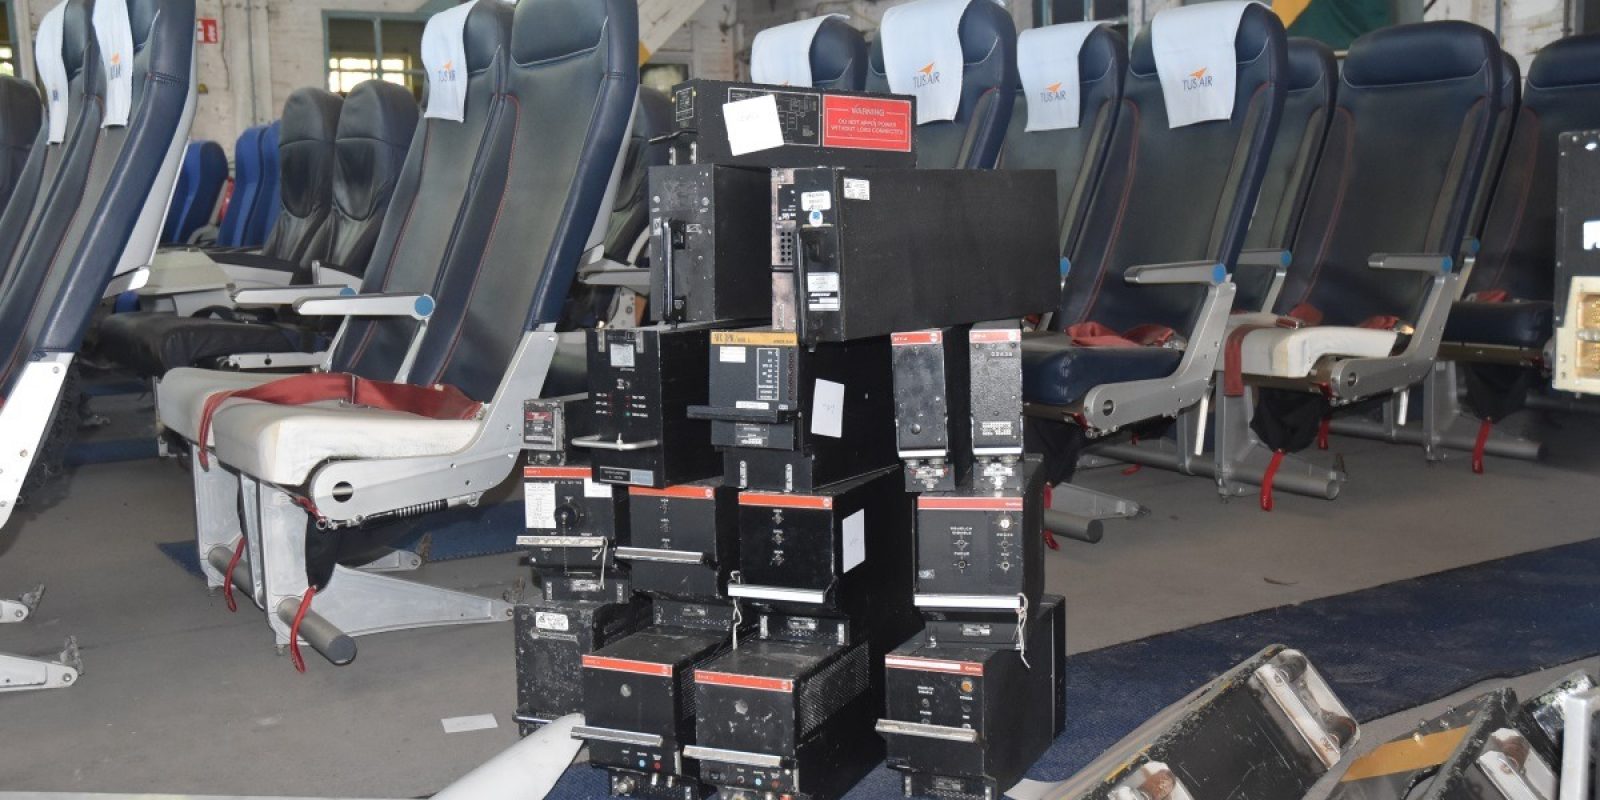 Zowel elektronica is hier te koop als F70-vliegtuigzetels van Tus Airways. (Foto Luc Wittemans)